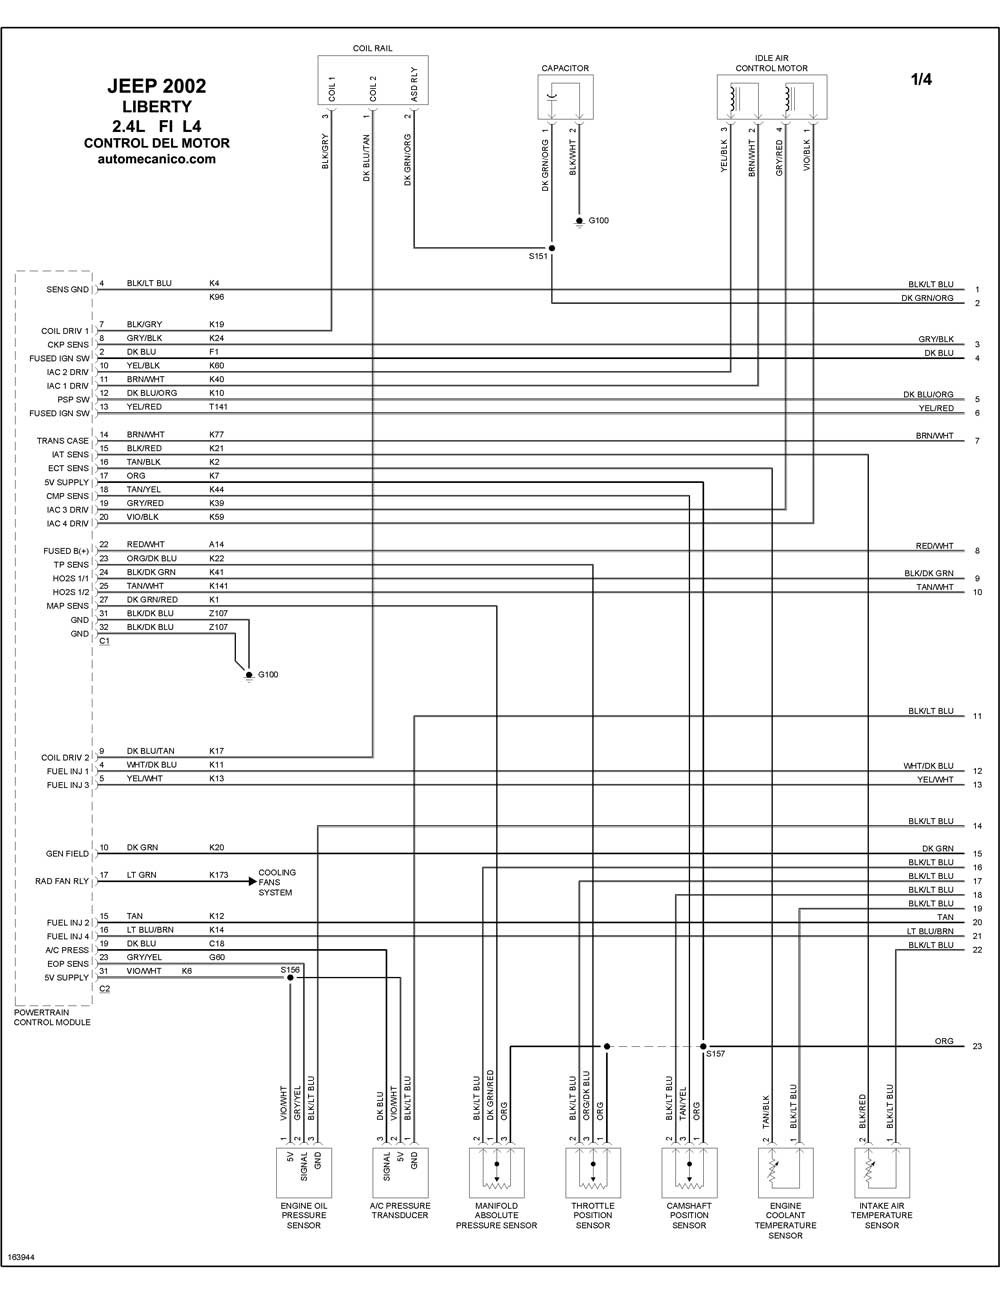 Diagrama Delmotor De Liverti 3.7 Jeep Kj 2003 Jeep – Diagramas Control Del Motor 2002 – Graphics – Esquemas … Of Diagrama Delmotor De Liverti 3.7 Jeep Kj 2003